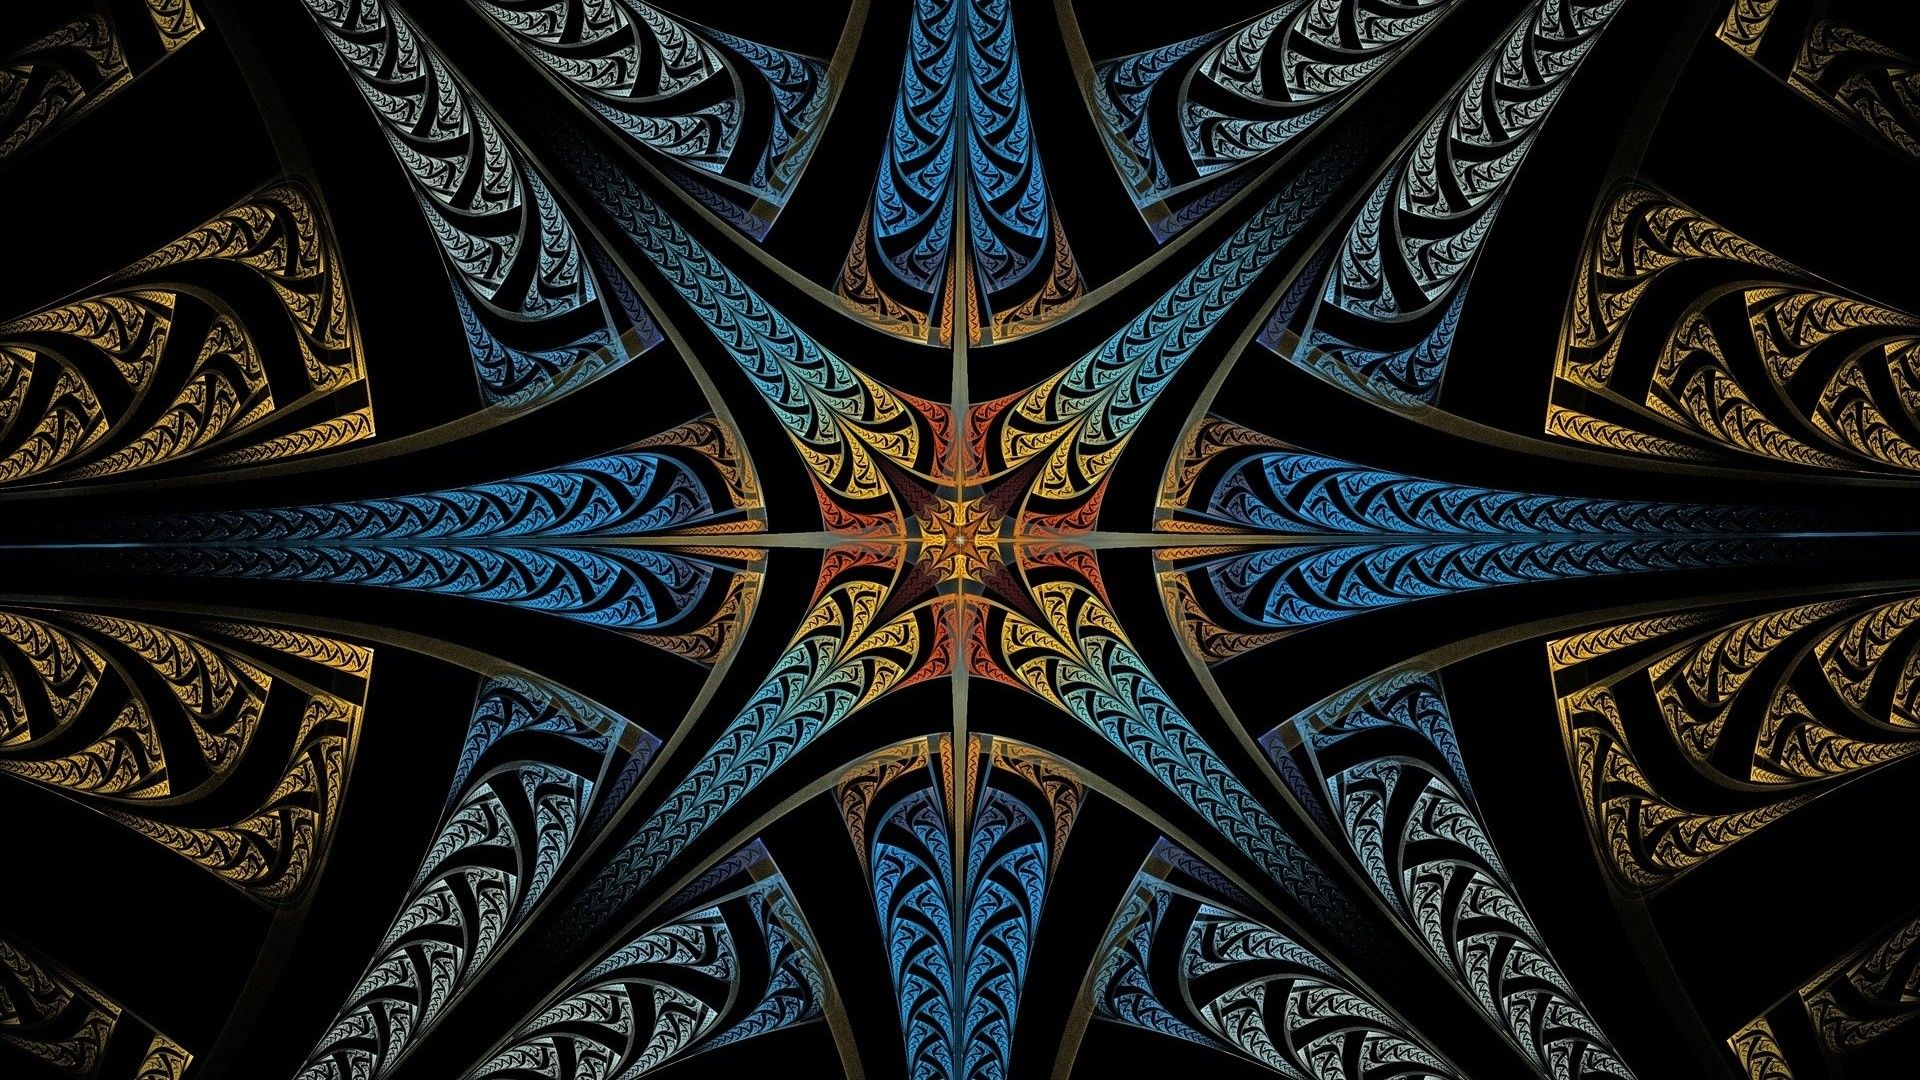 abstract fractal 46497 | BACKGROUNDS | Pinterest | Board art ...